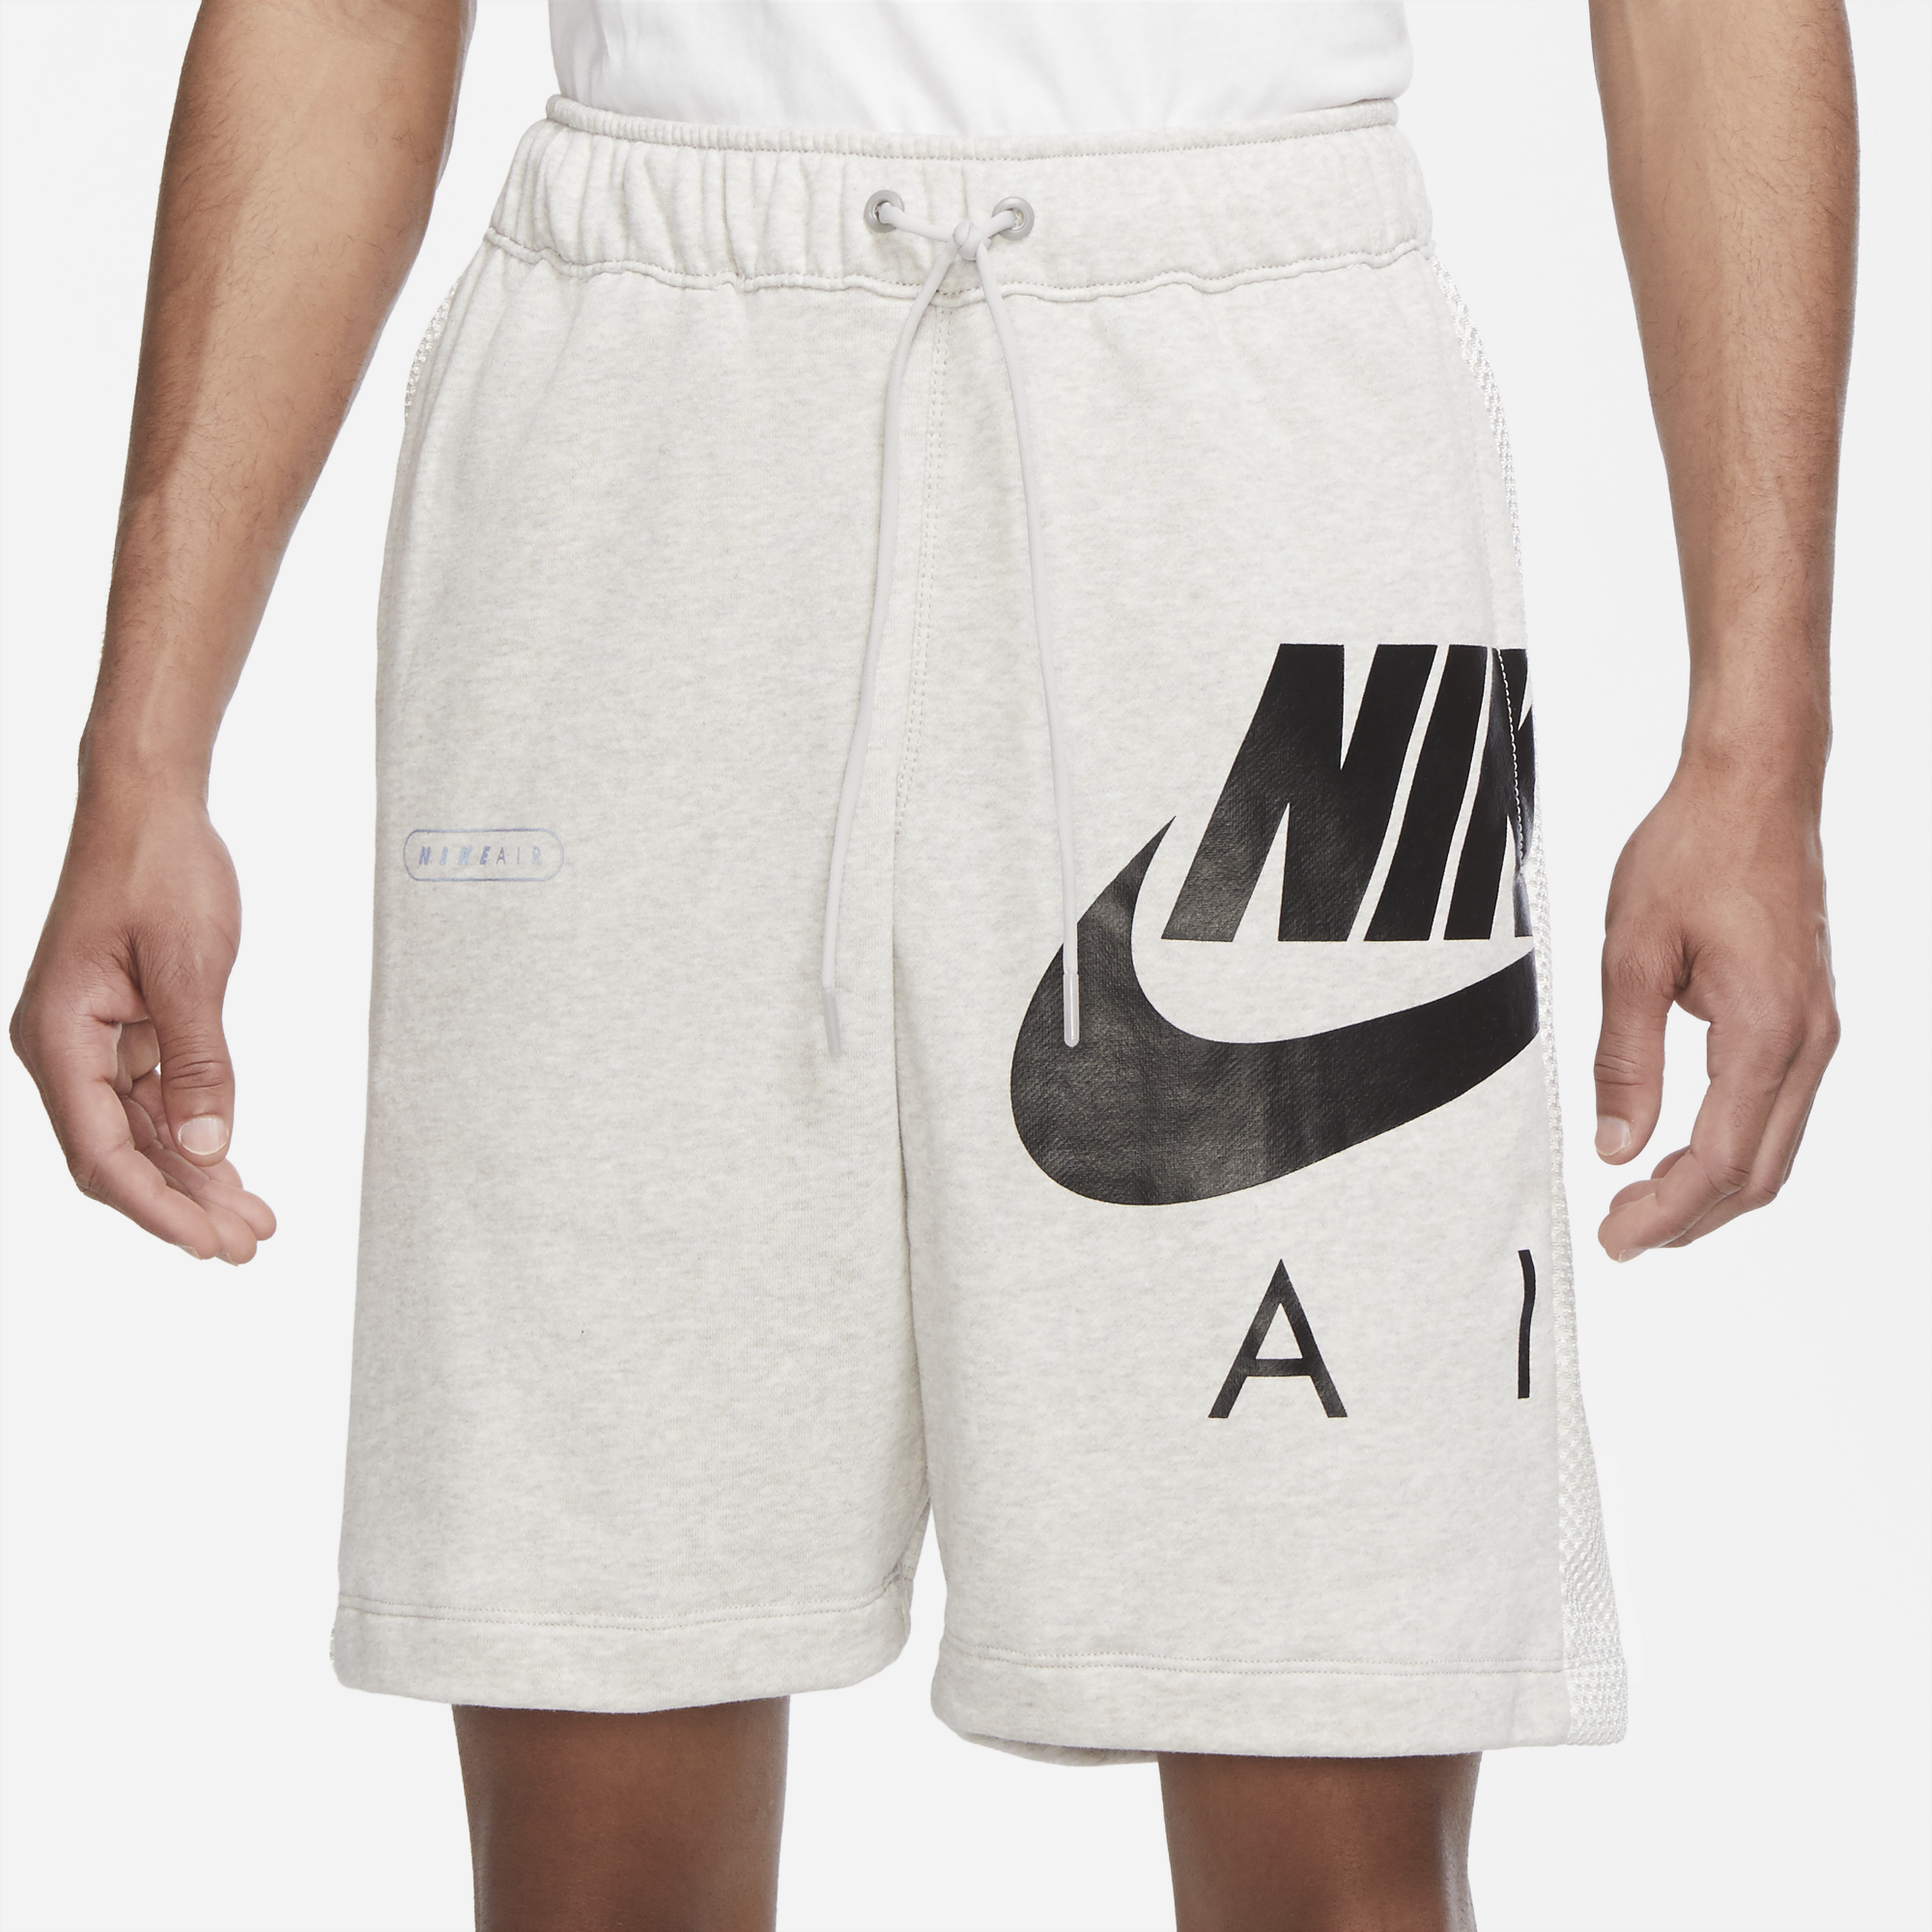 Idioot Vervreemding Terug, terug, terug deel Nike Sportswear Air FT Shorts | Foot Locker